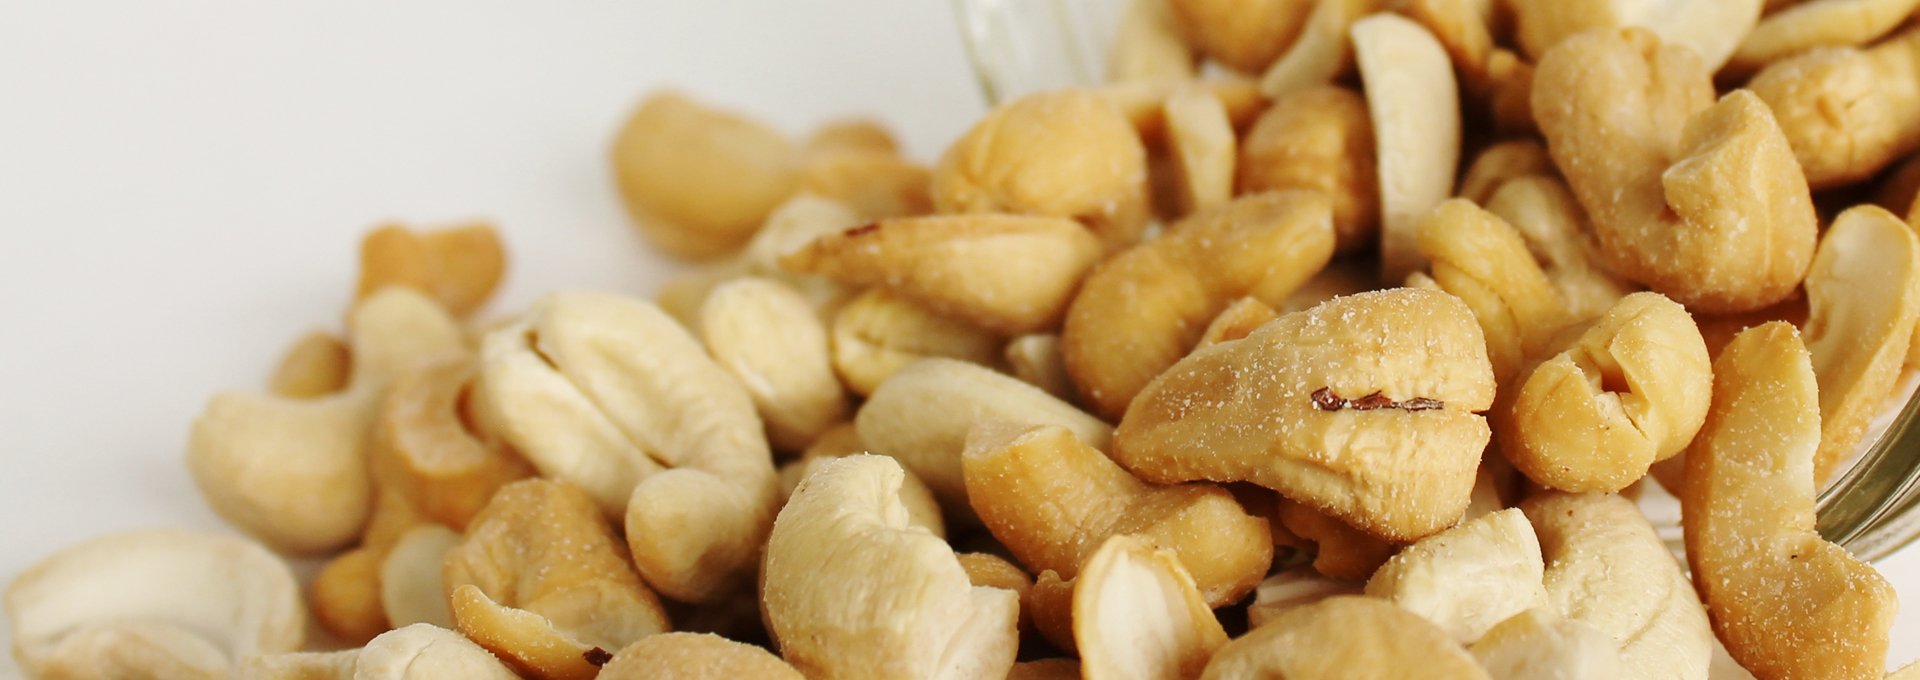 Best qulaity cashews at your doorstep delivery